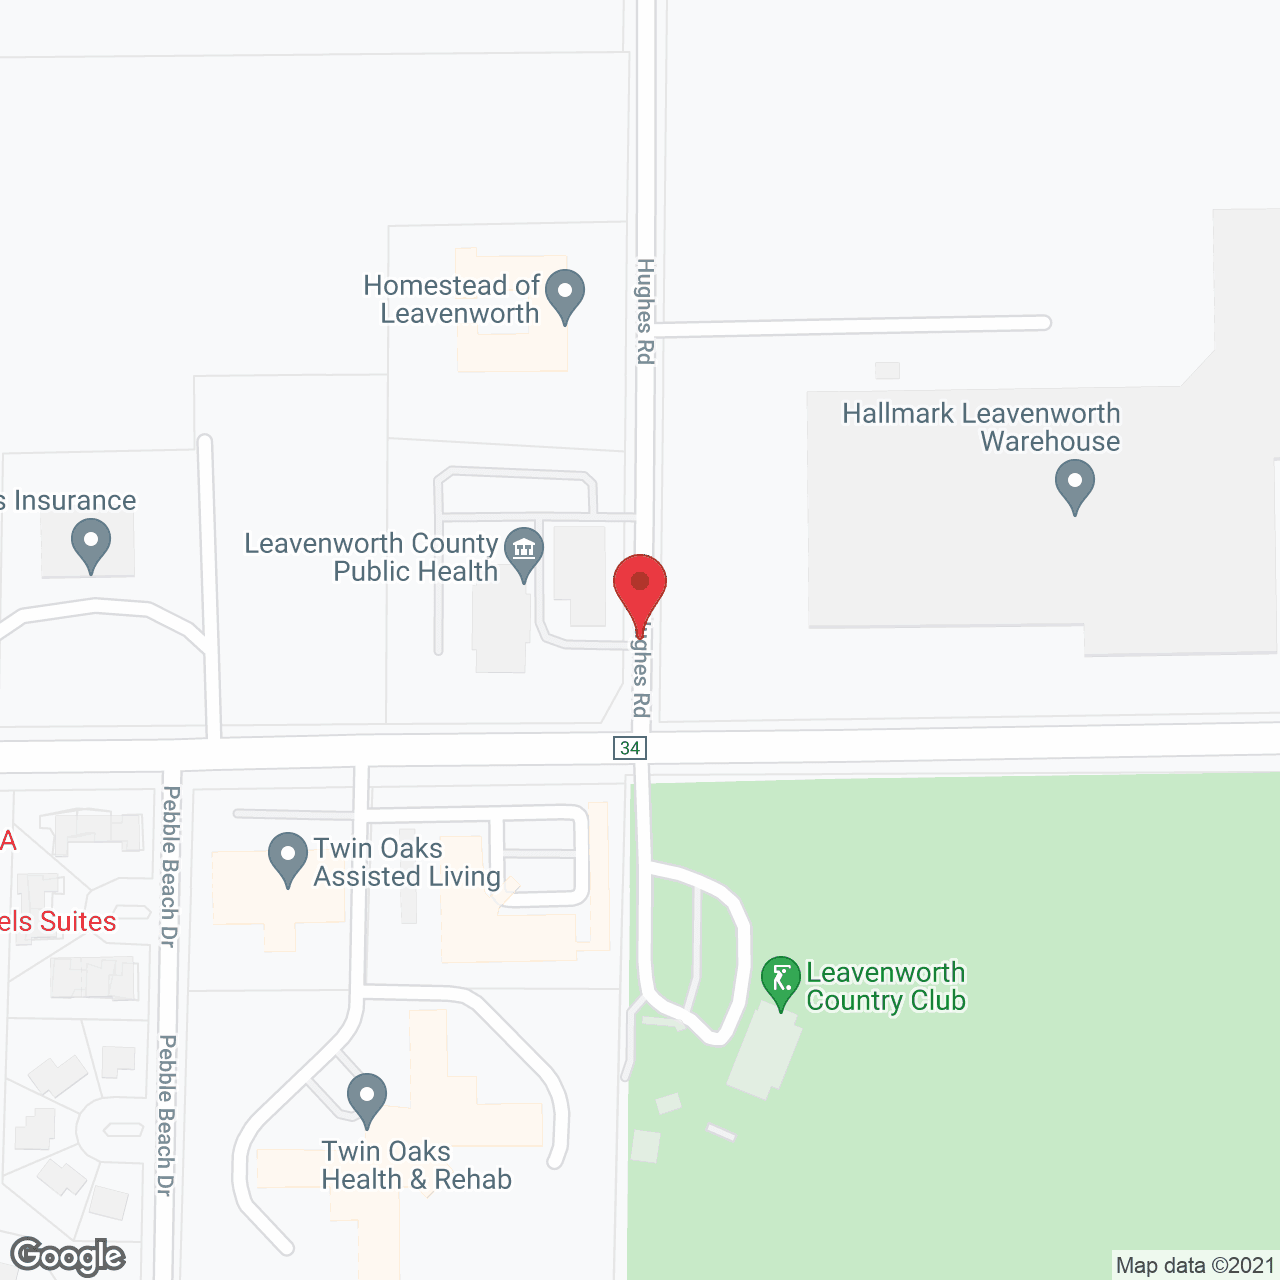 Homestead of Leavenworth in google map